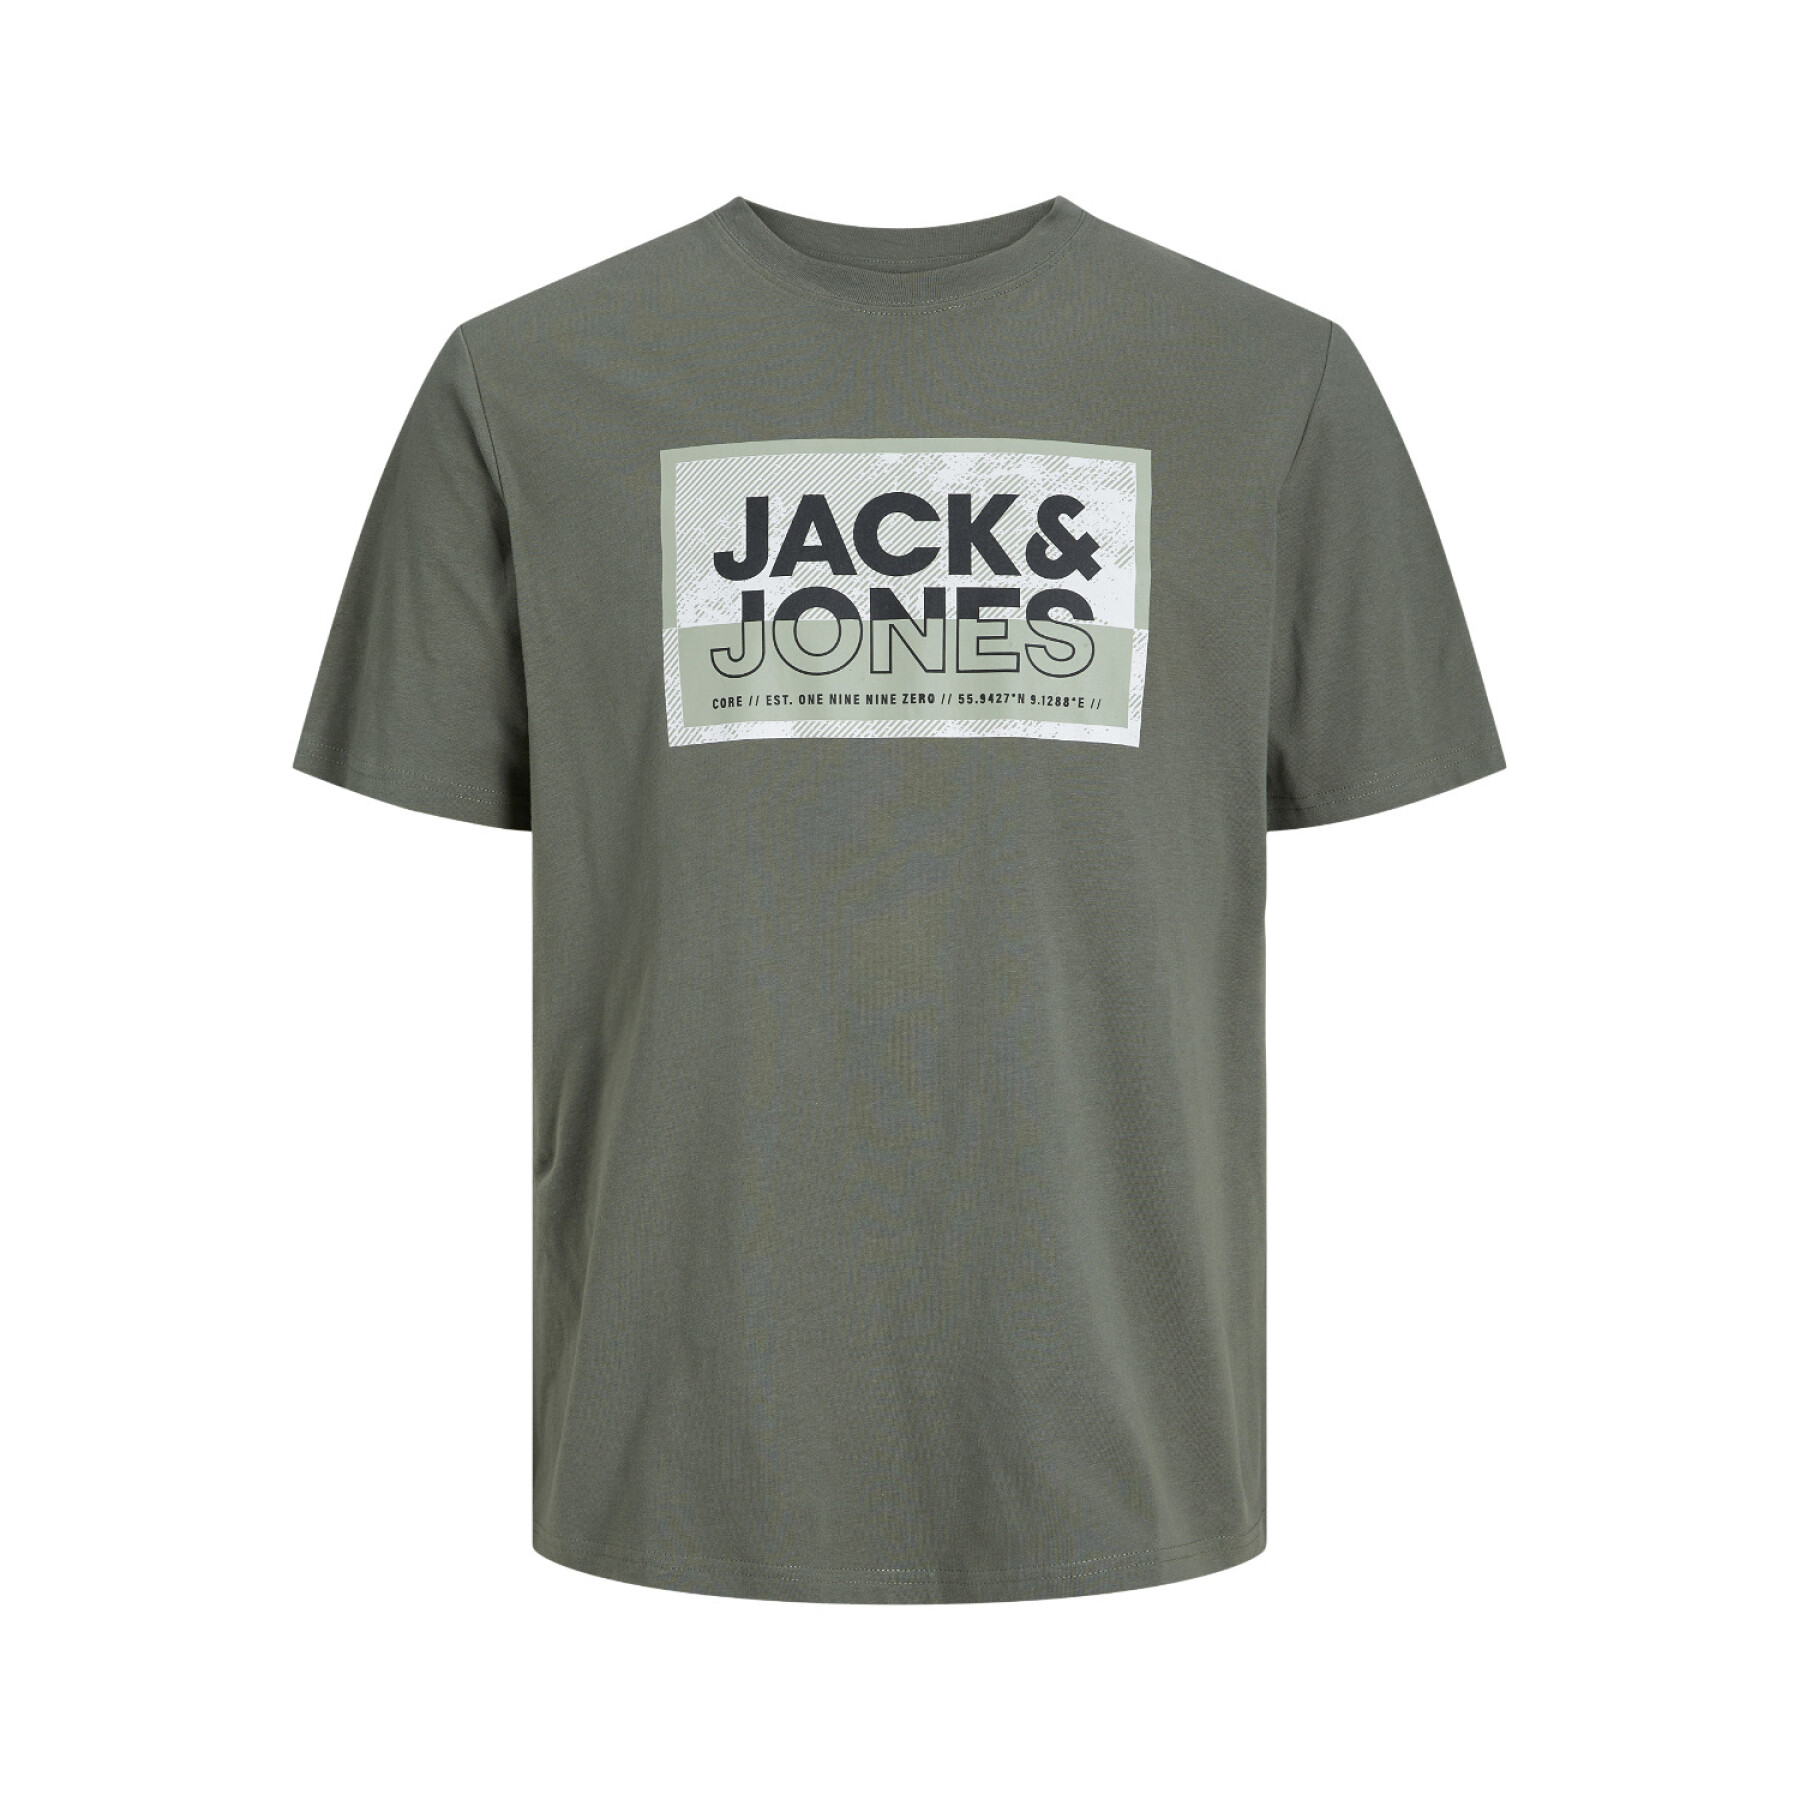 Kinder-T-shirt Jack & Jones Logan